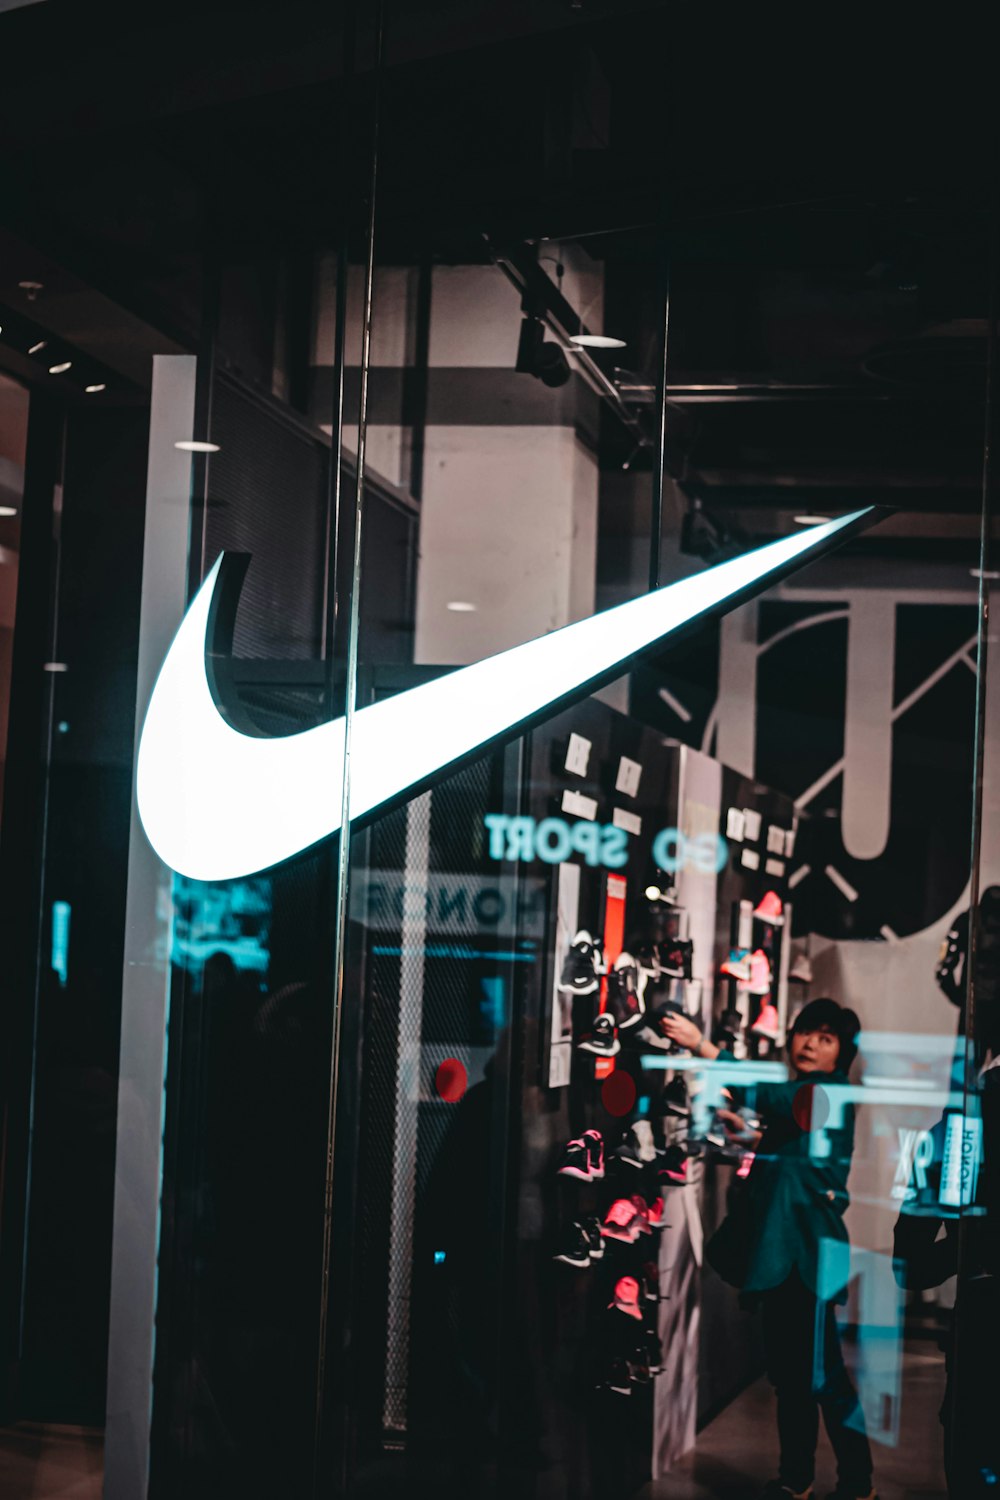 Nike logo on wall photo – Free Person Image on Unsplash